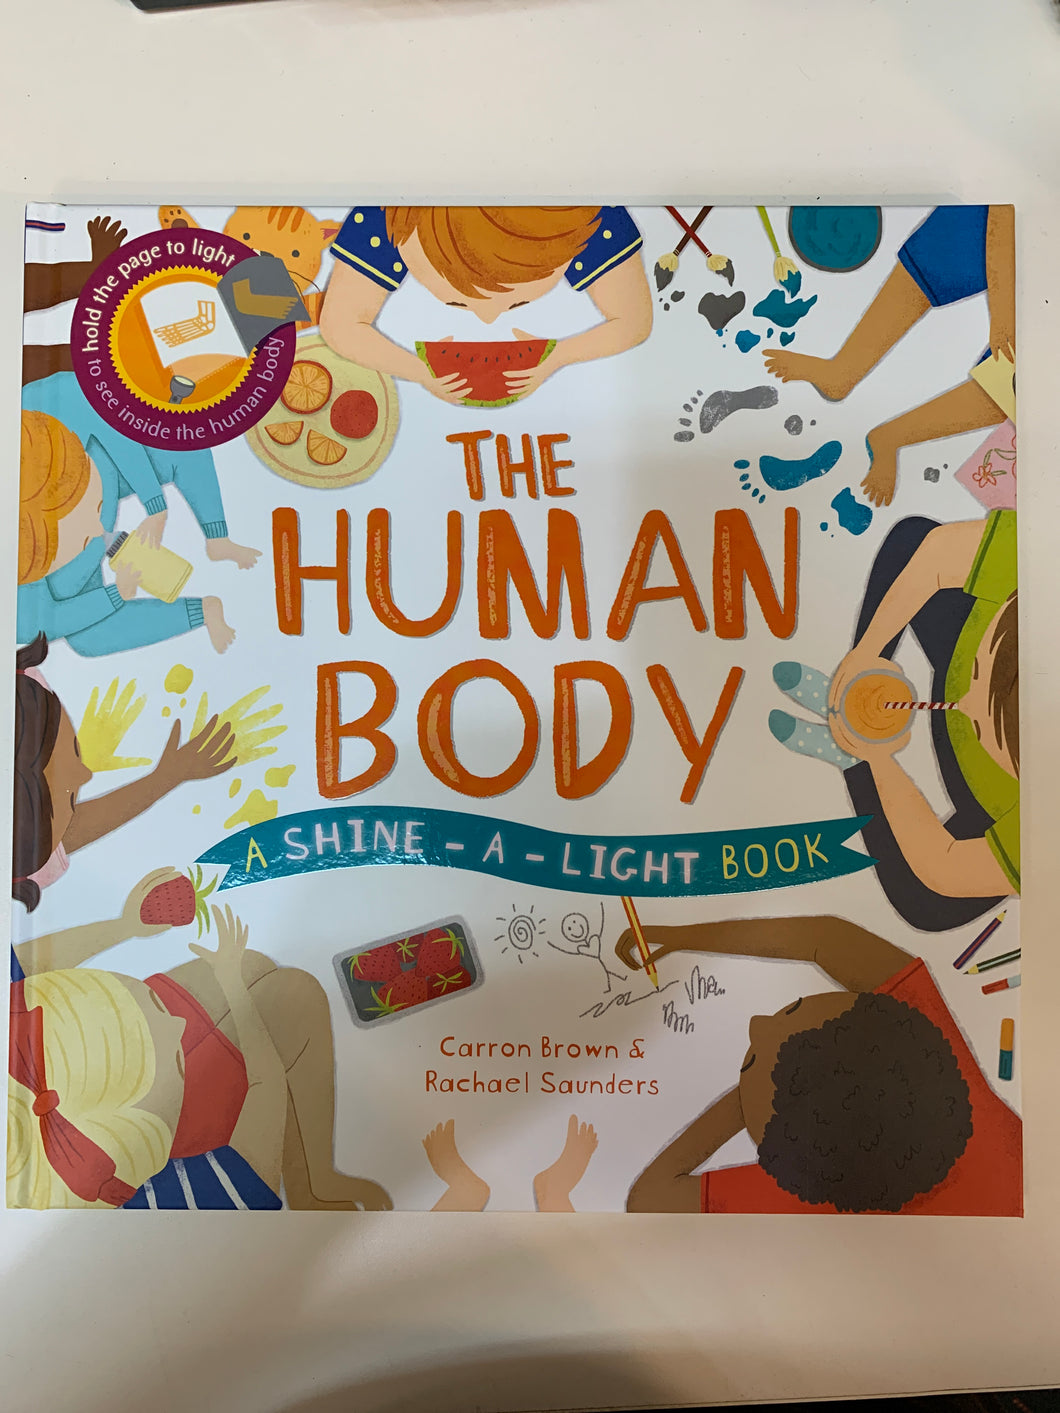 The Human Body - A Shine a Light Book